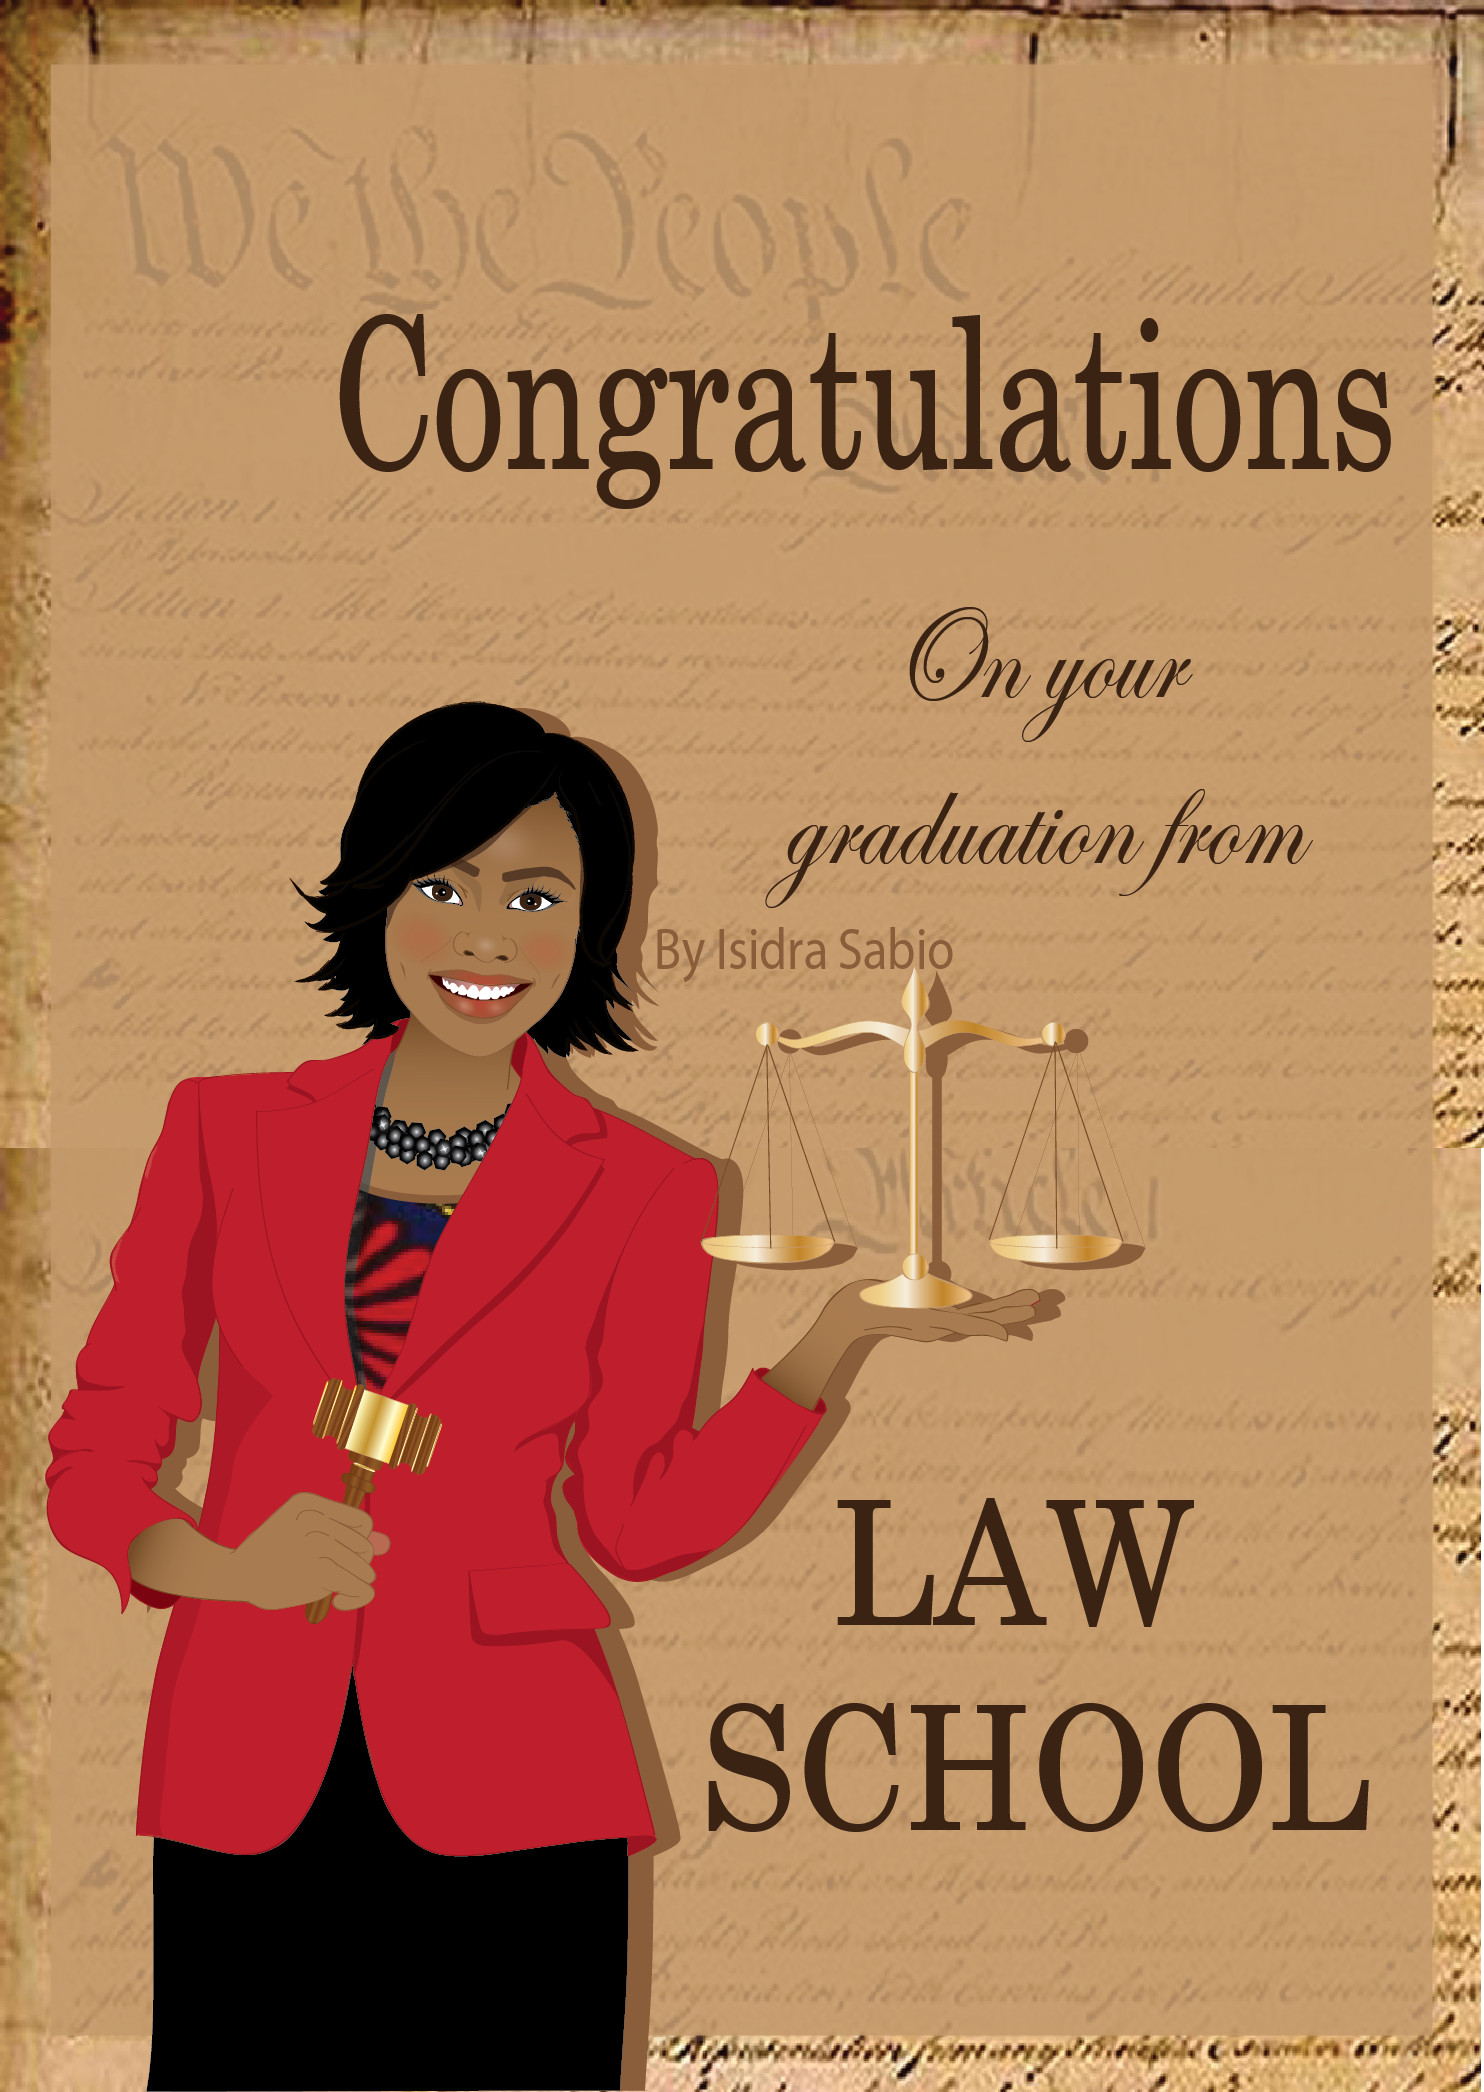 Law School Graduation Quotes
 Graduation Congratulations on your Law School Degree